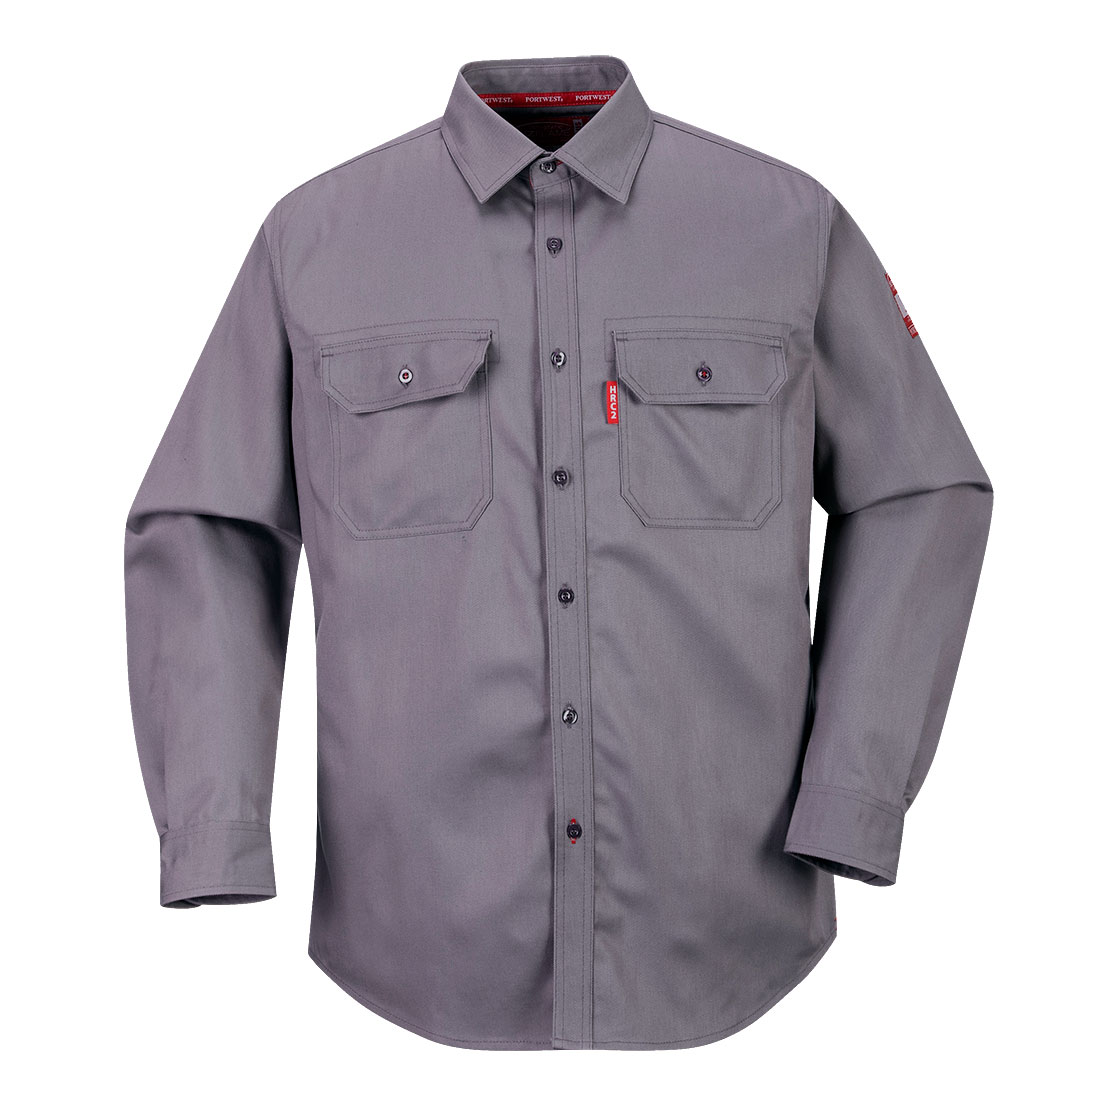 FR89 Portwest® Bizflame® 88/12 FR/AR Button Down Shirts - Gray